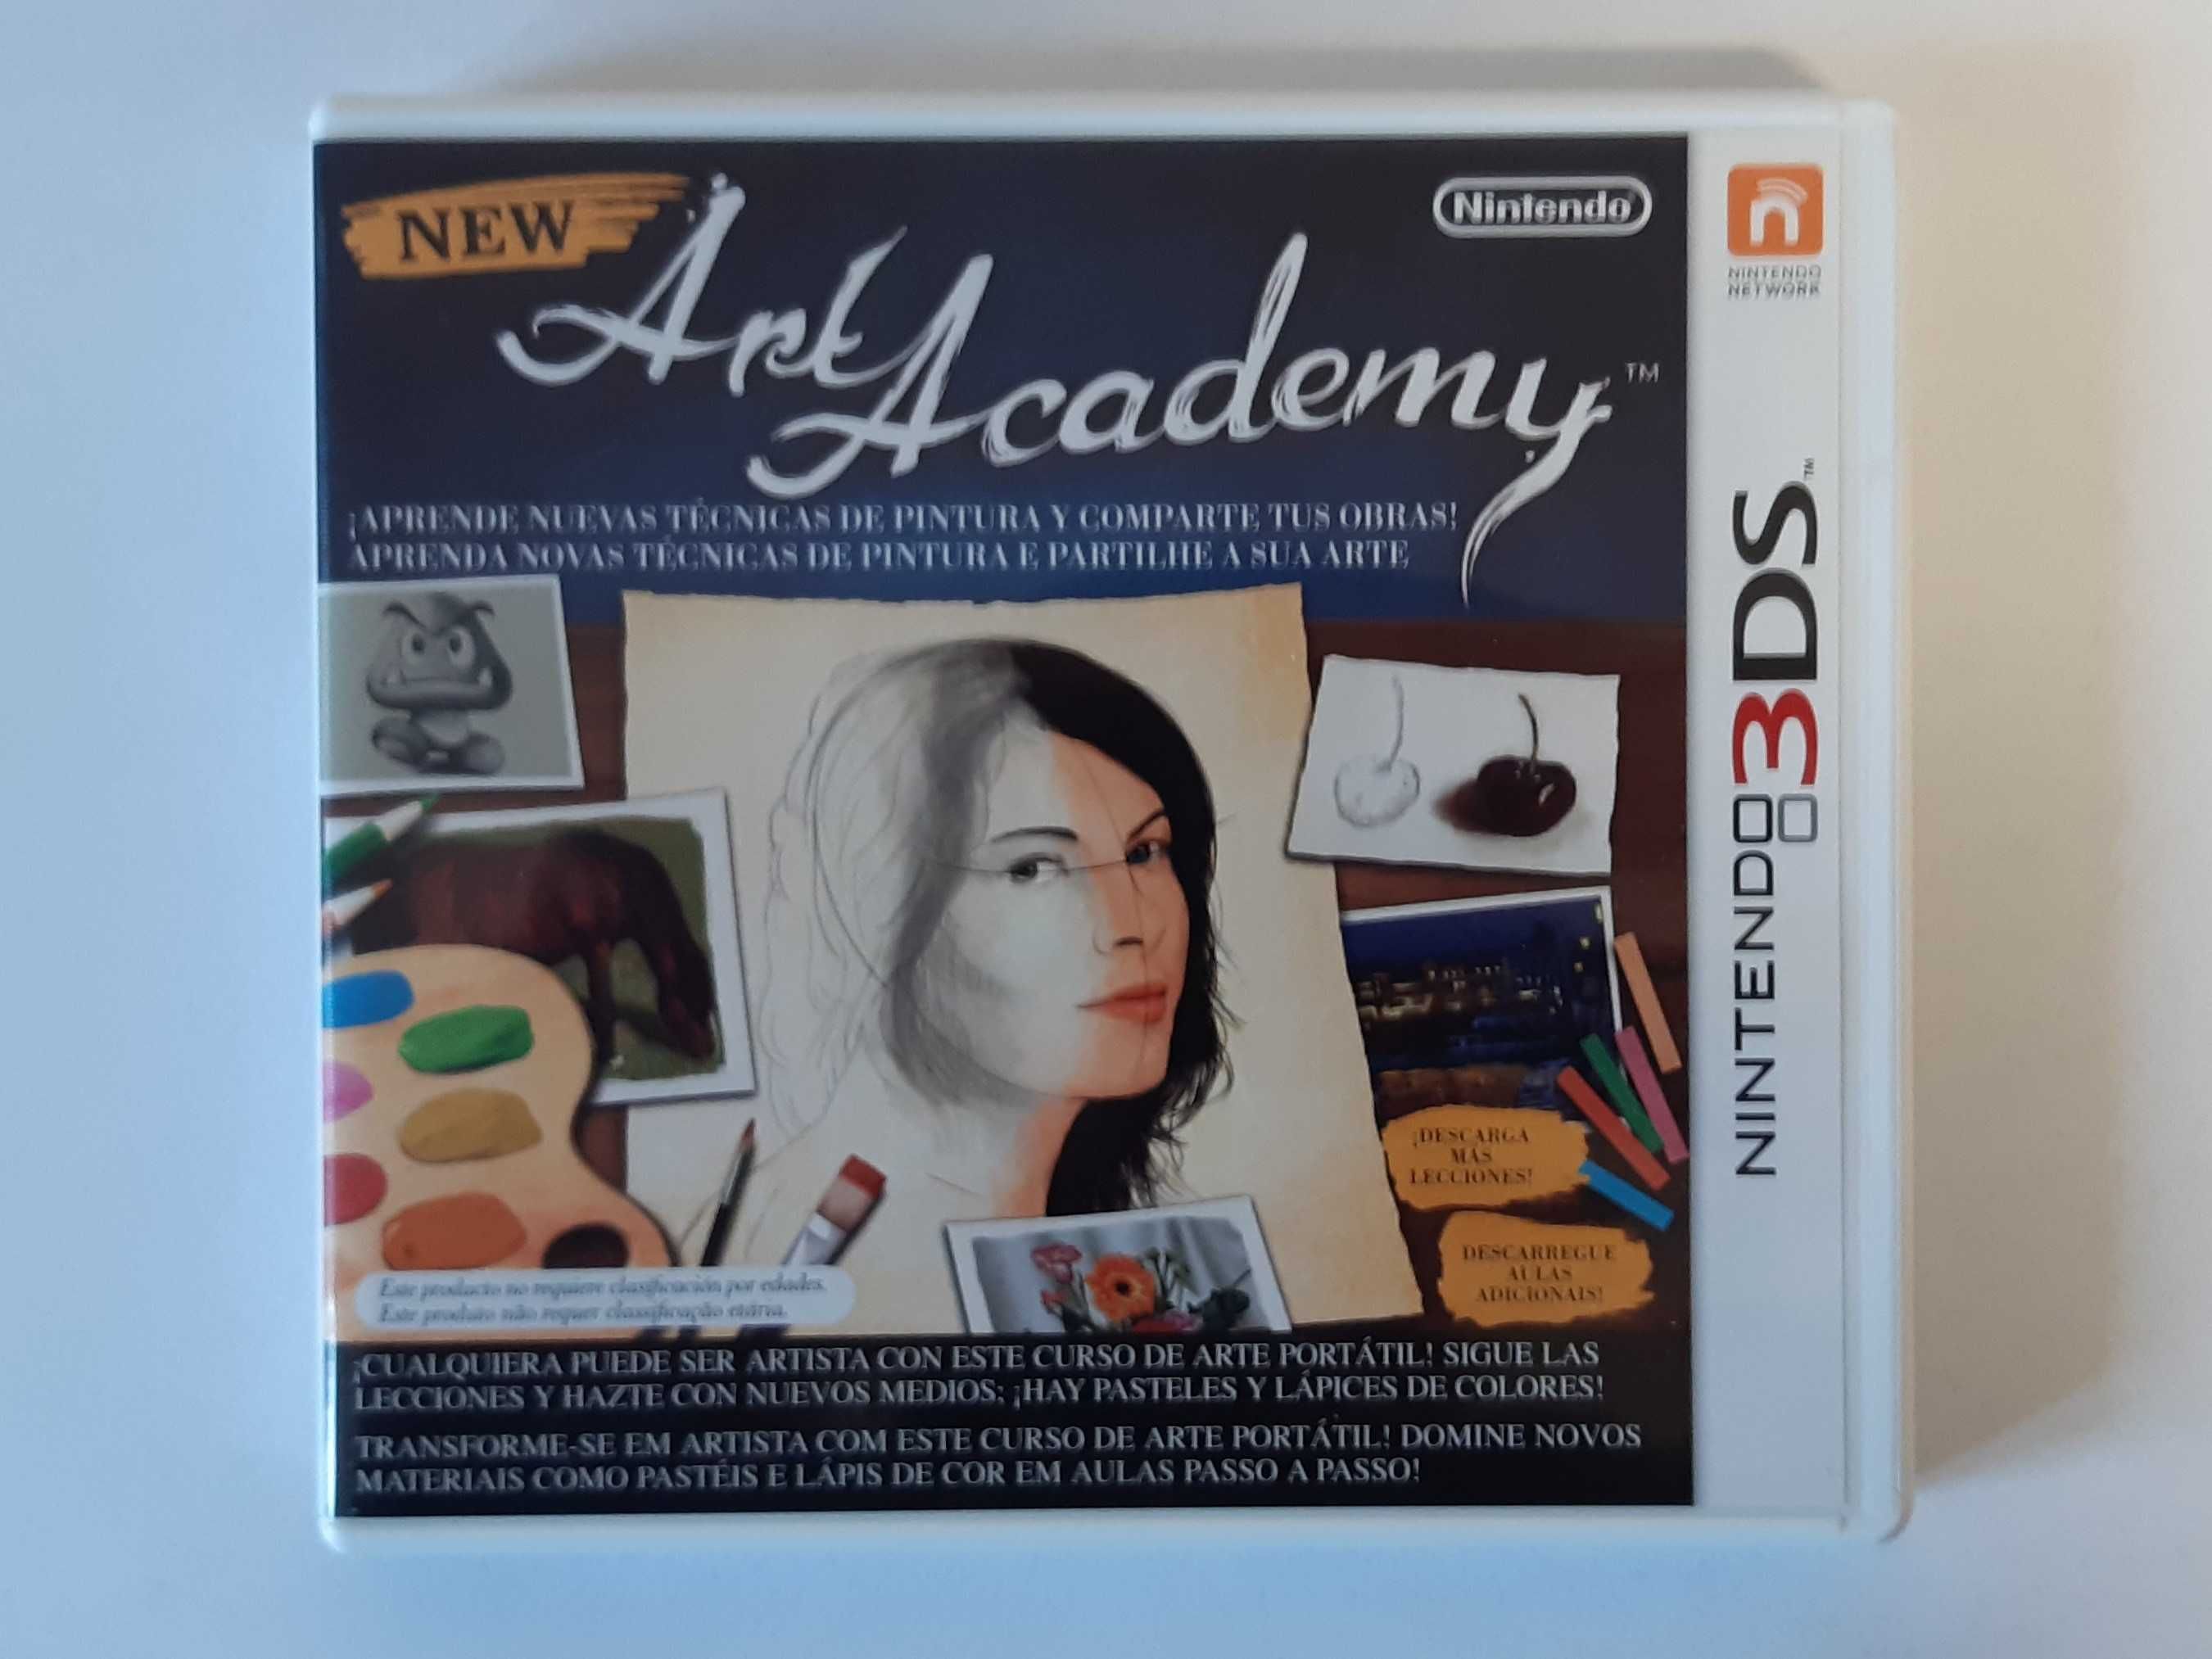 New Art Academy - Nintendo 3DS